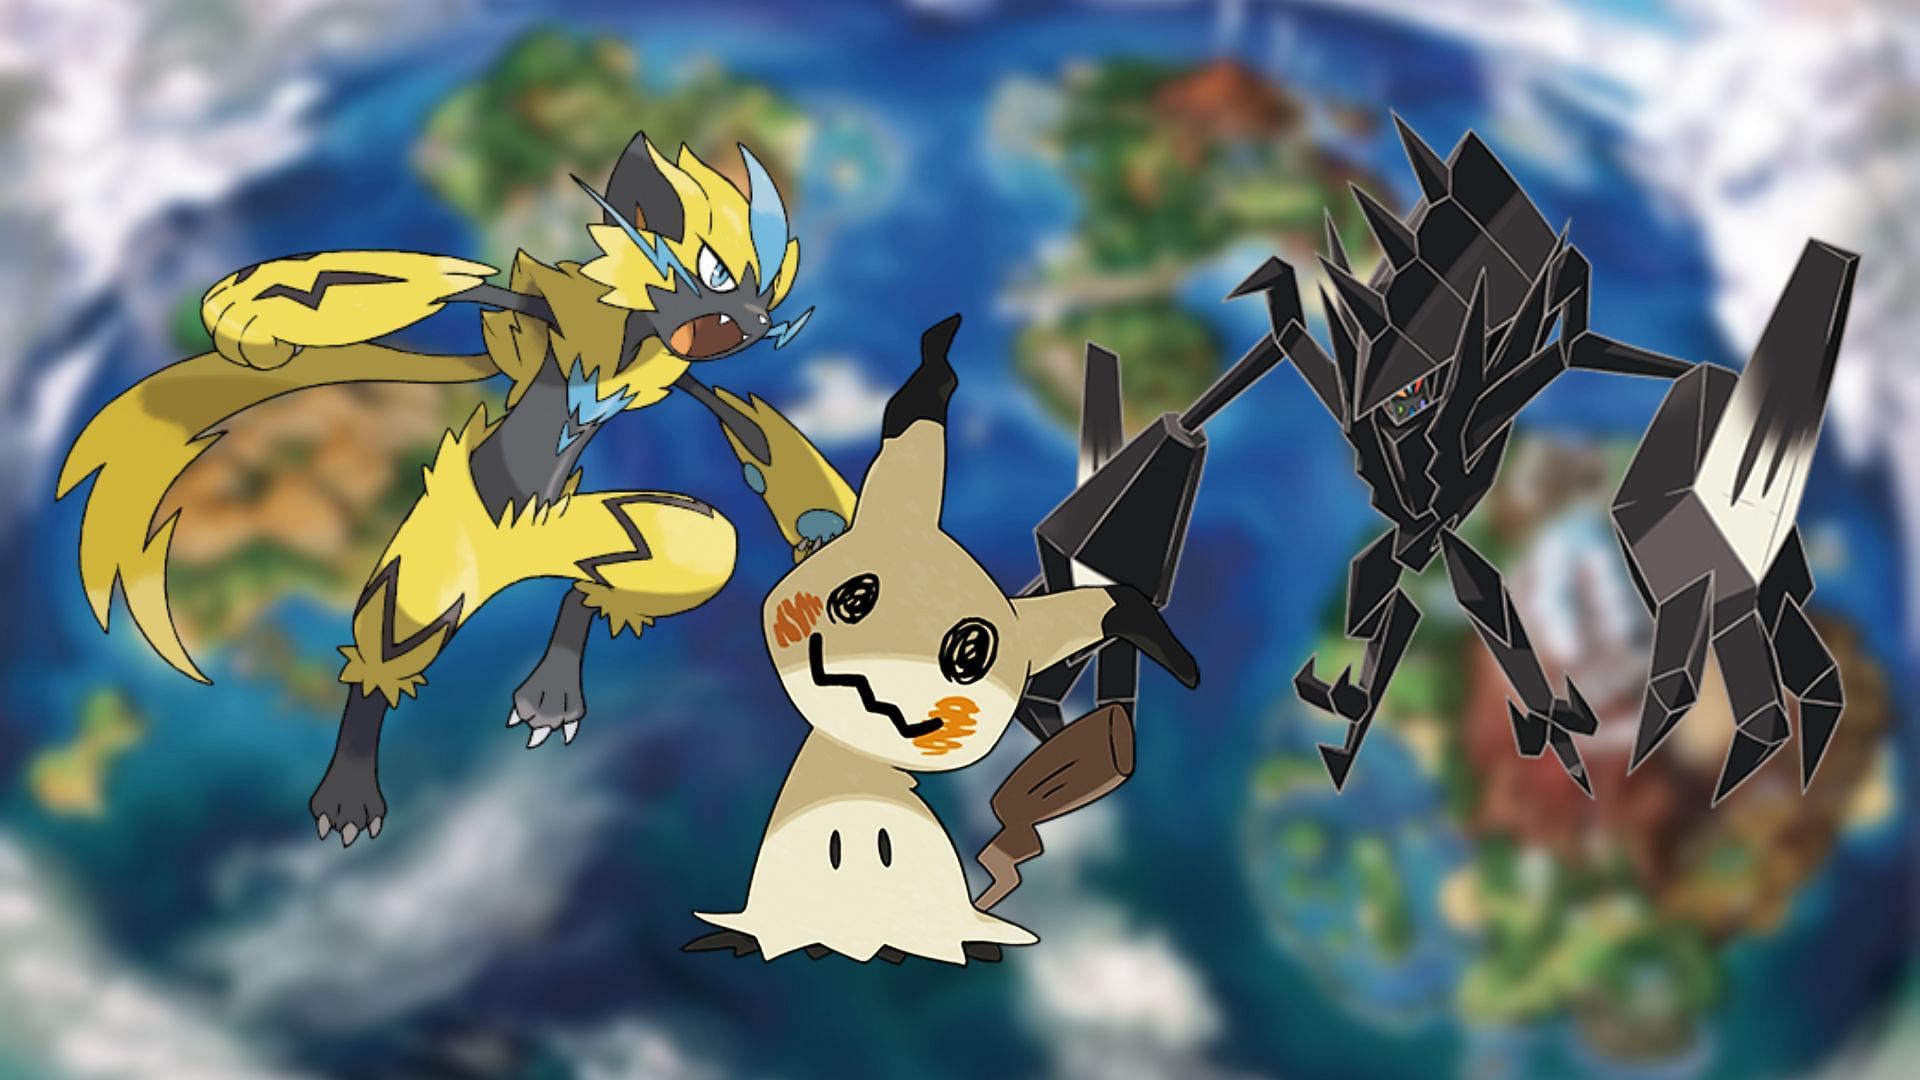 Pokémon: All Legendary Battle Themes + Mythical and Ultra Beasts